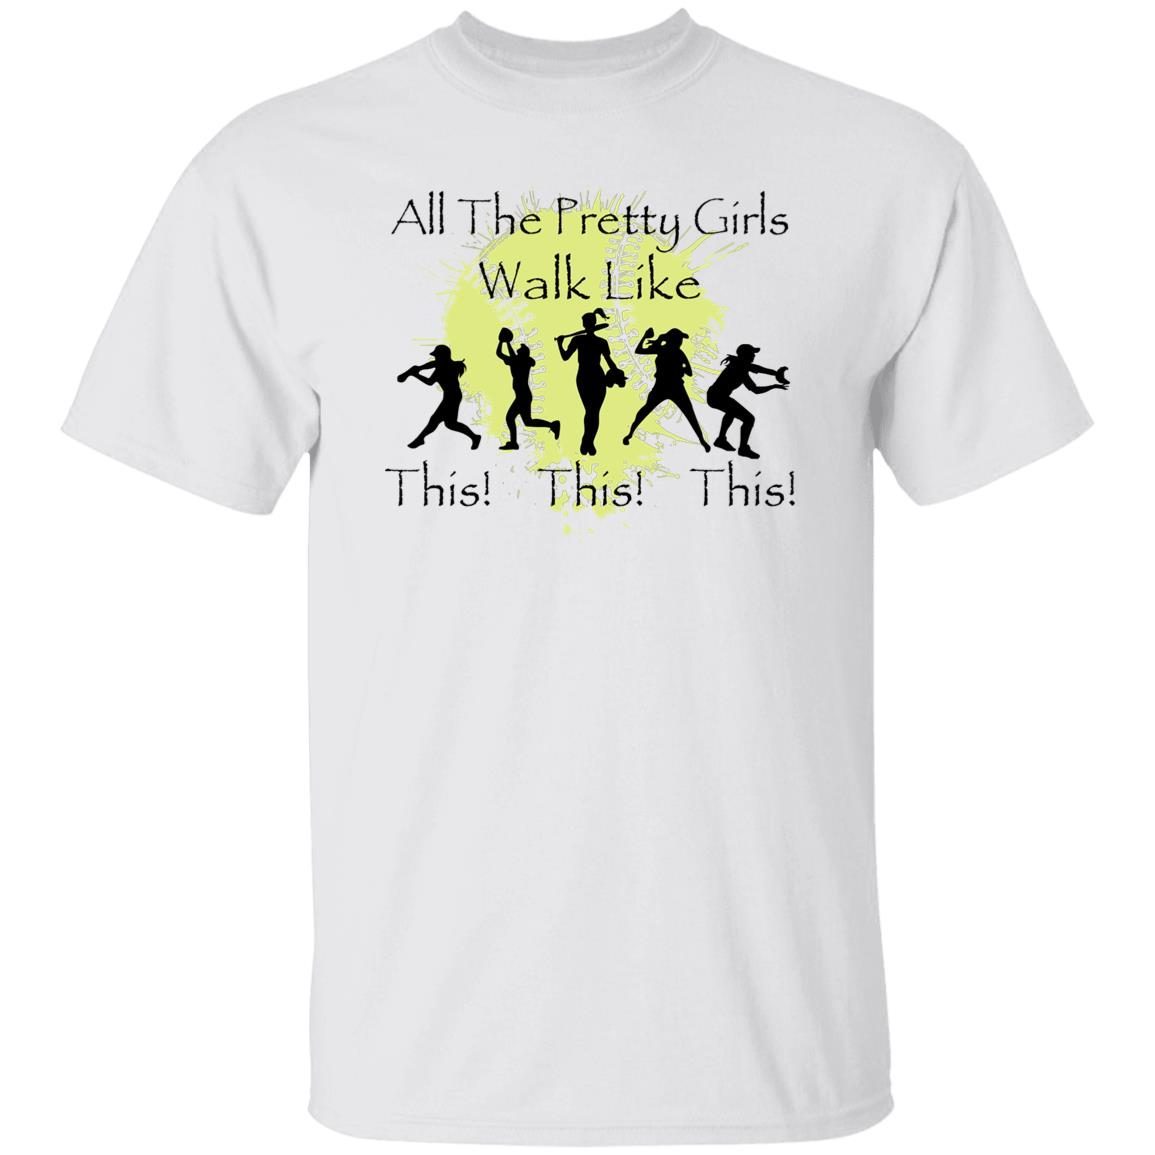 All The Pretty Girls Walk Like This shirt